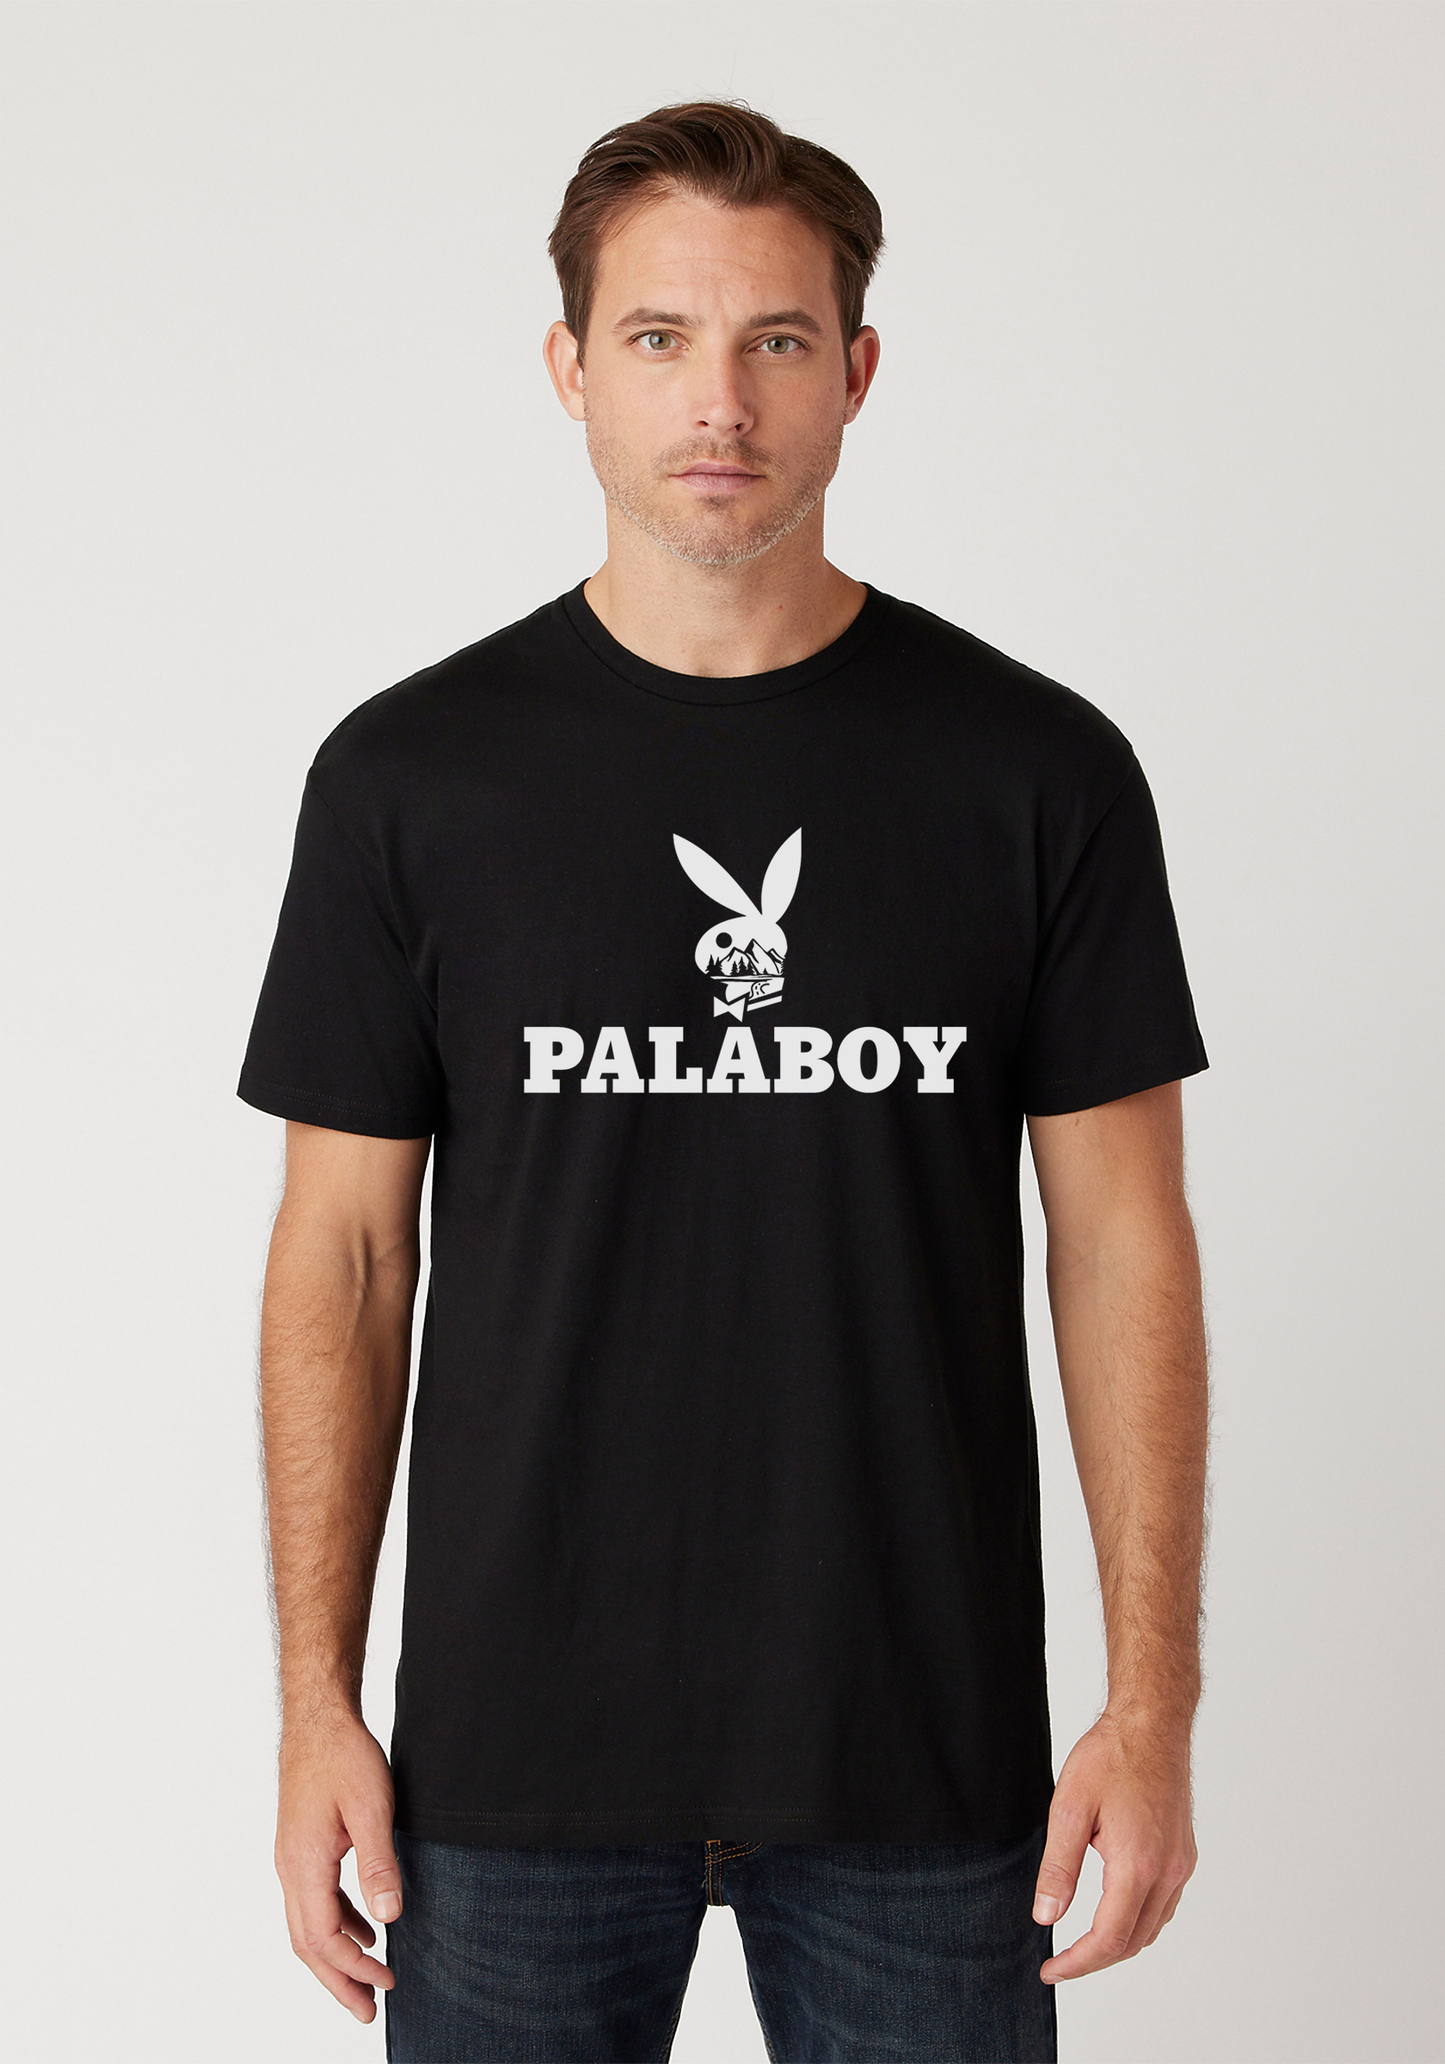 palaboy t-shirt, playboy palaboy parody funny t-shirts, moymoy palaboy, gala pa more, 